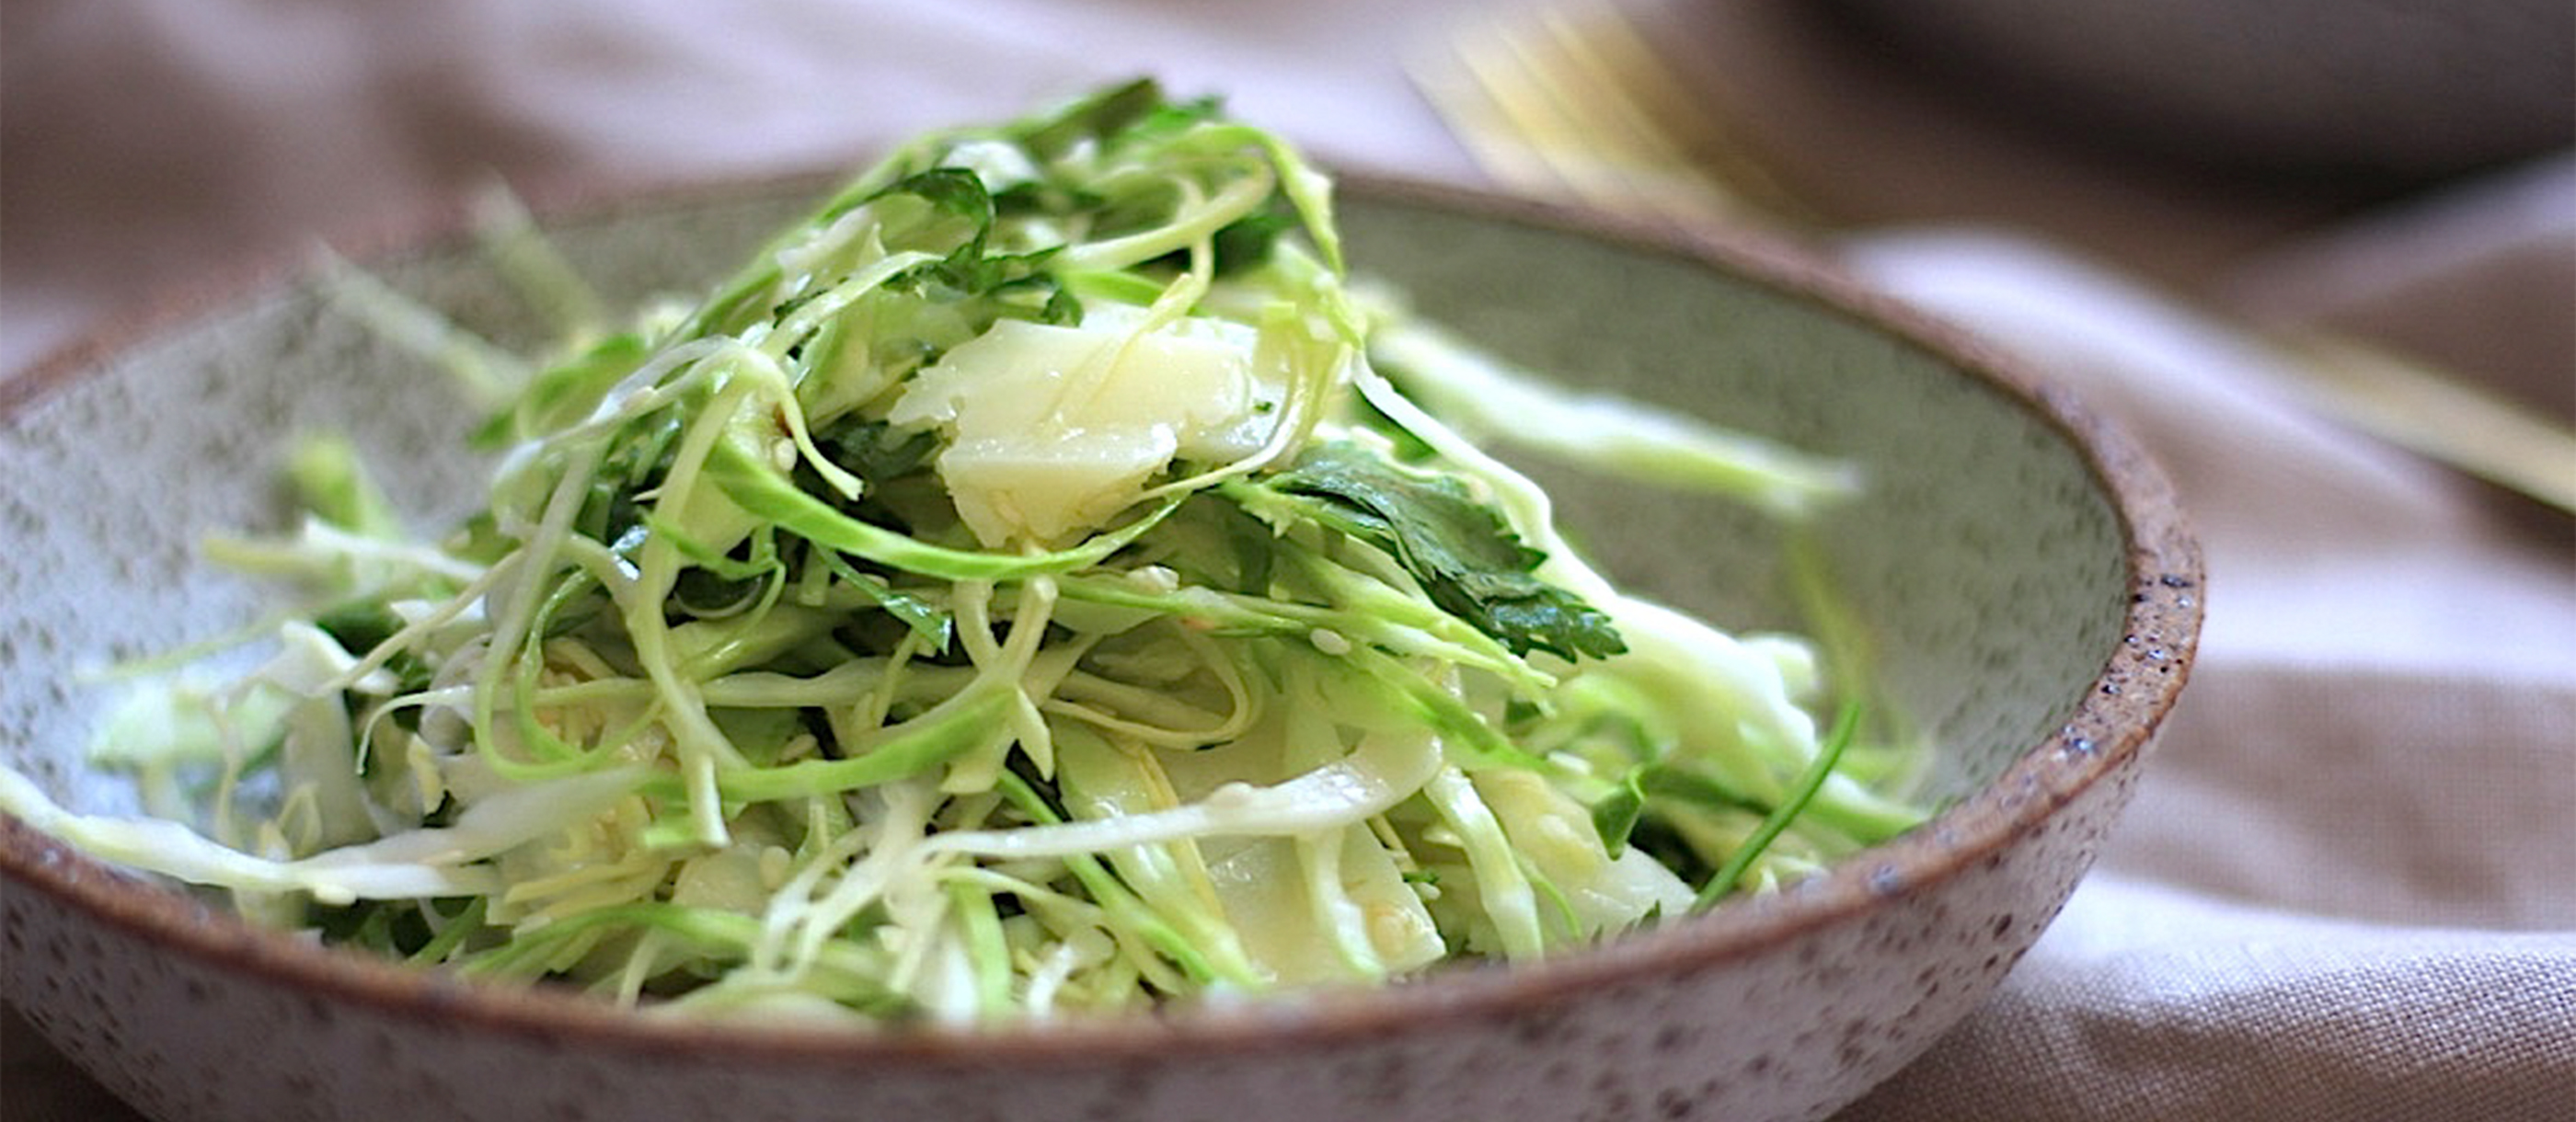 Lahanosalata | Traditional Salad From Greece